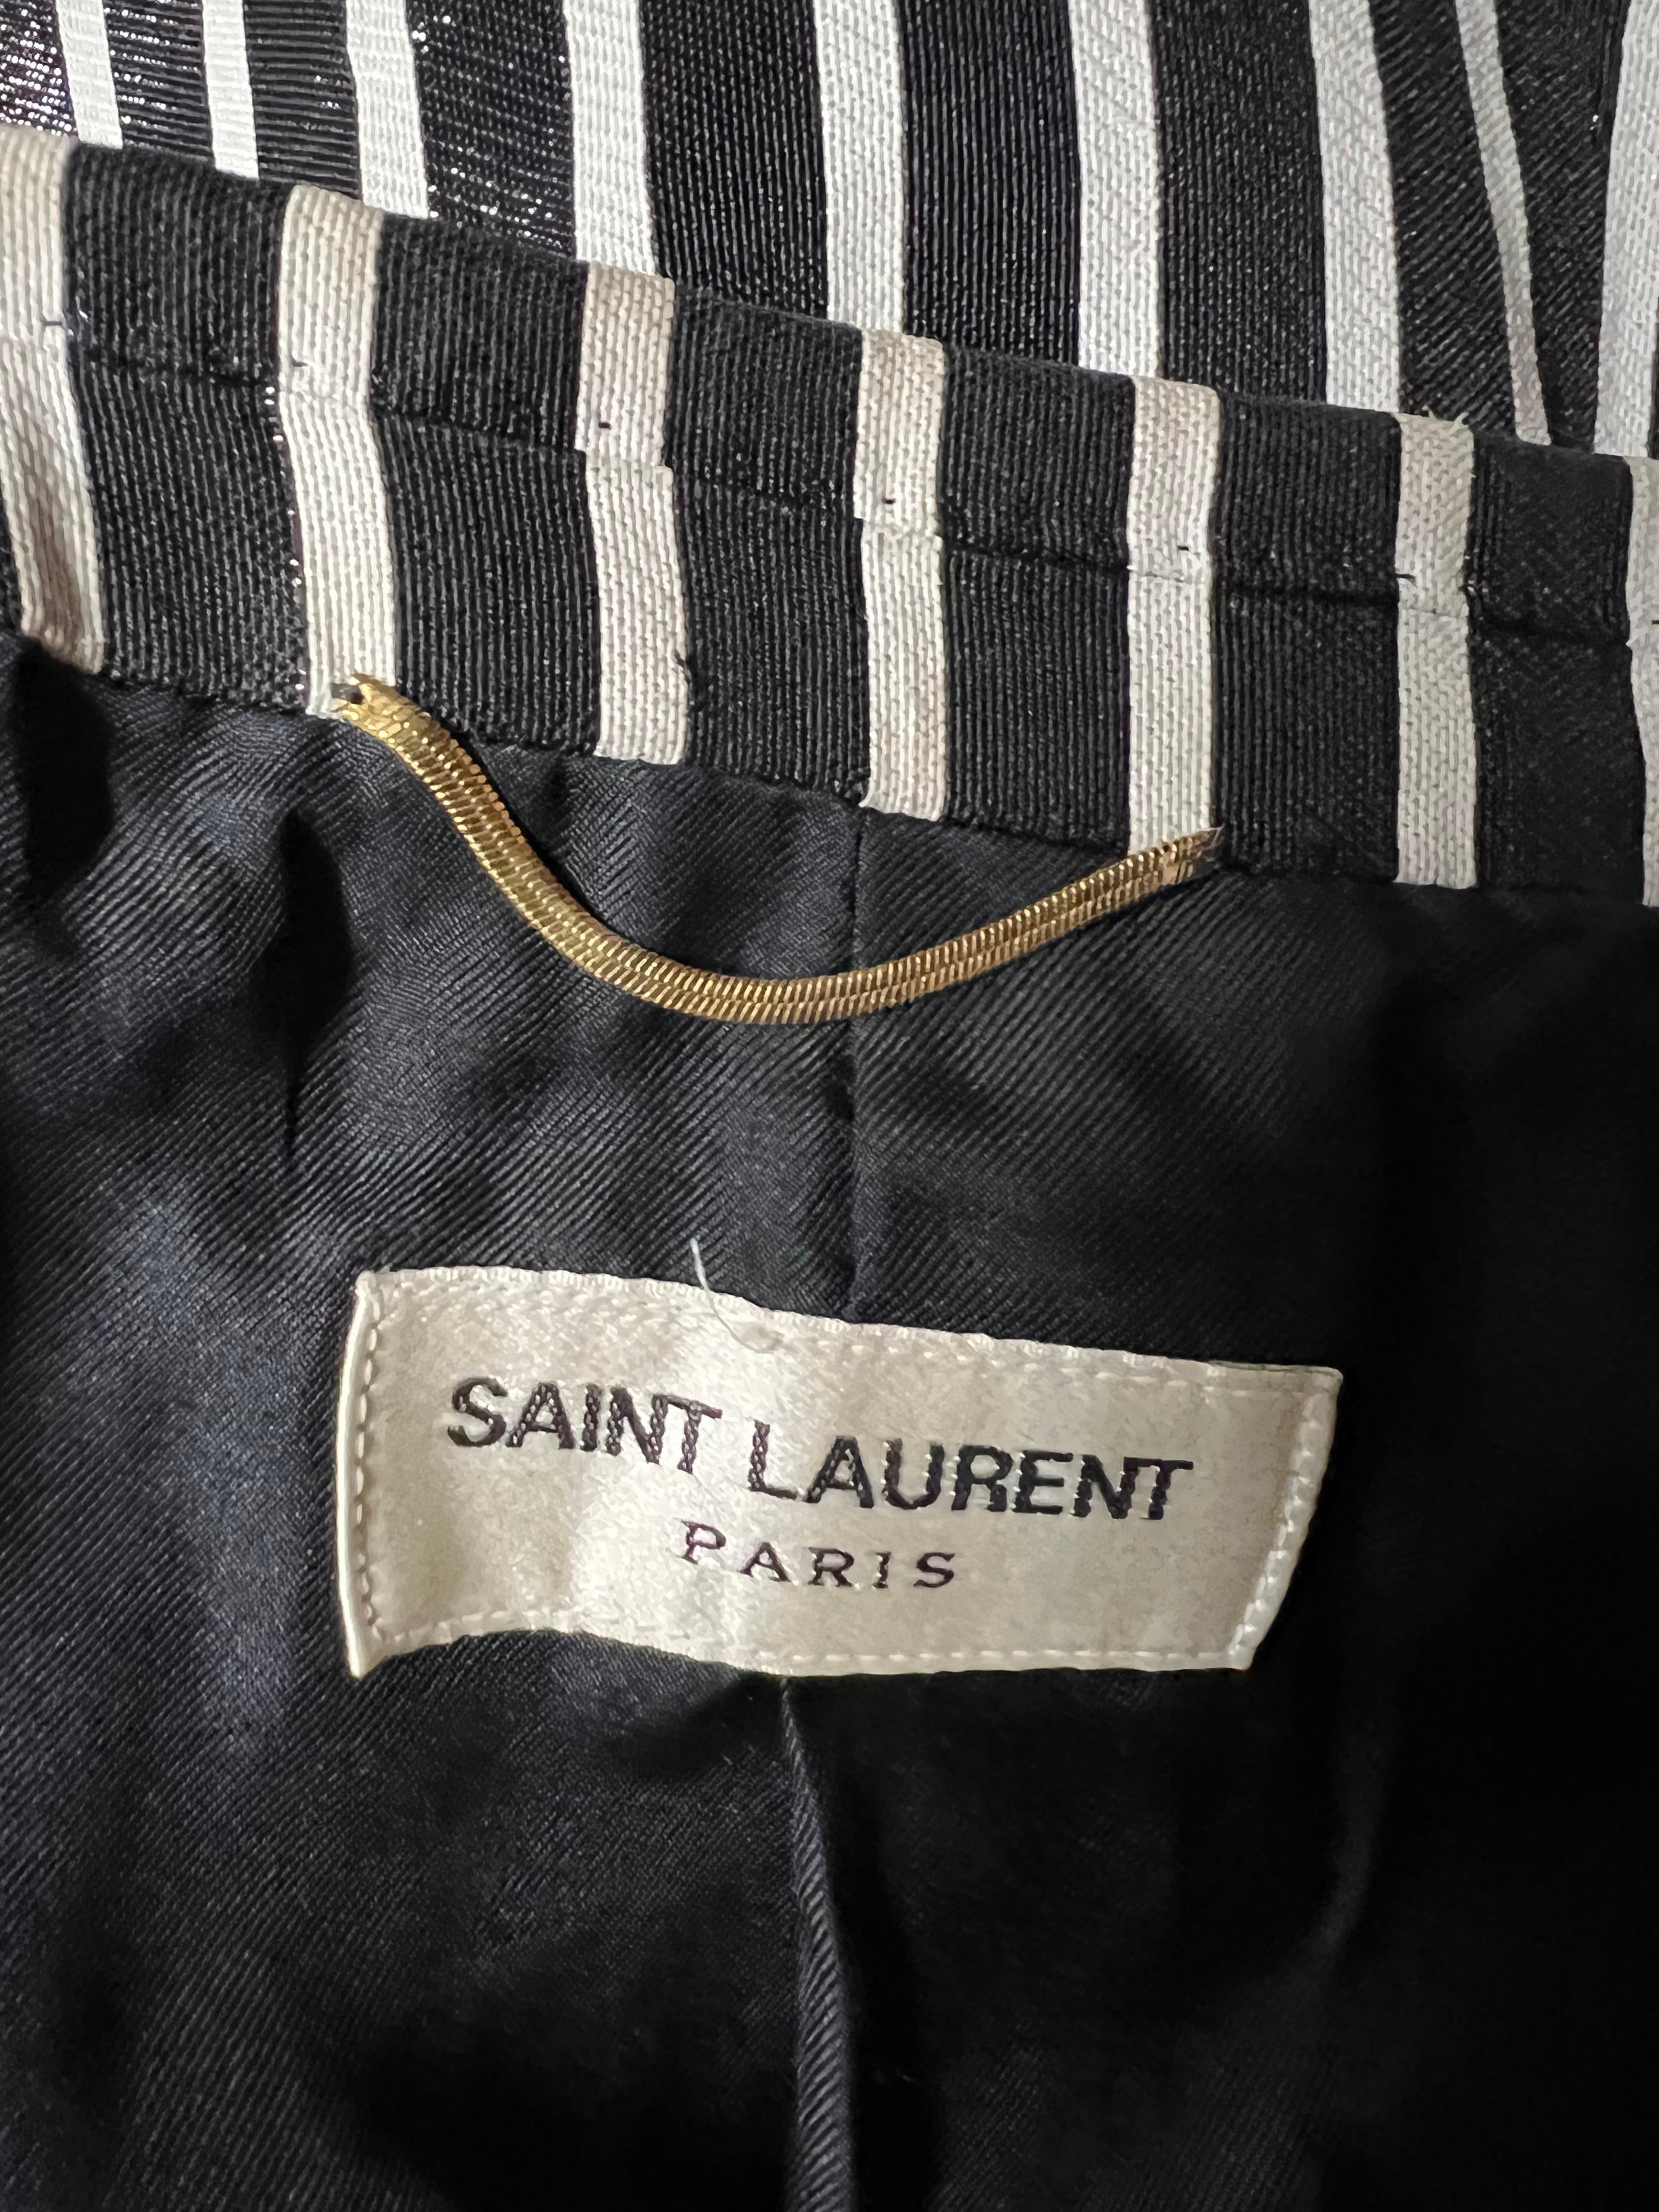 Saint Laurent Black and White Blazer, Size 42 For Sale 1